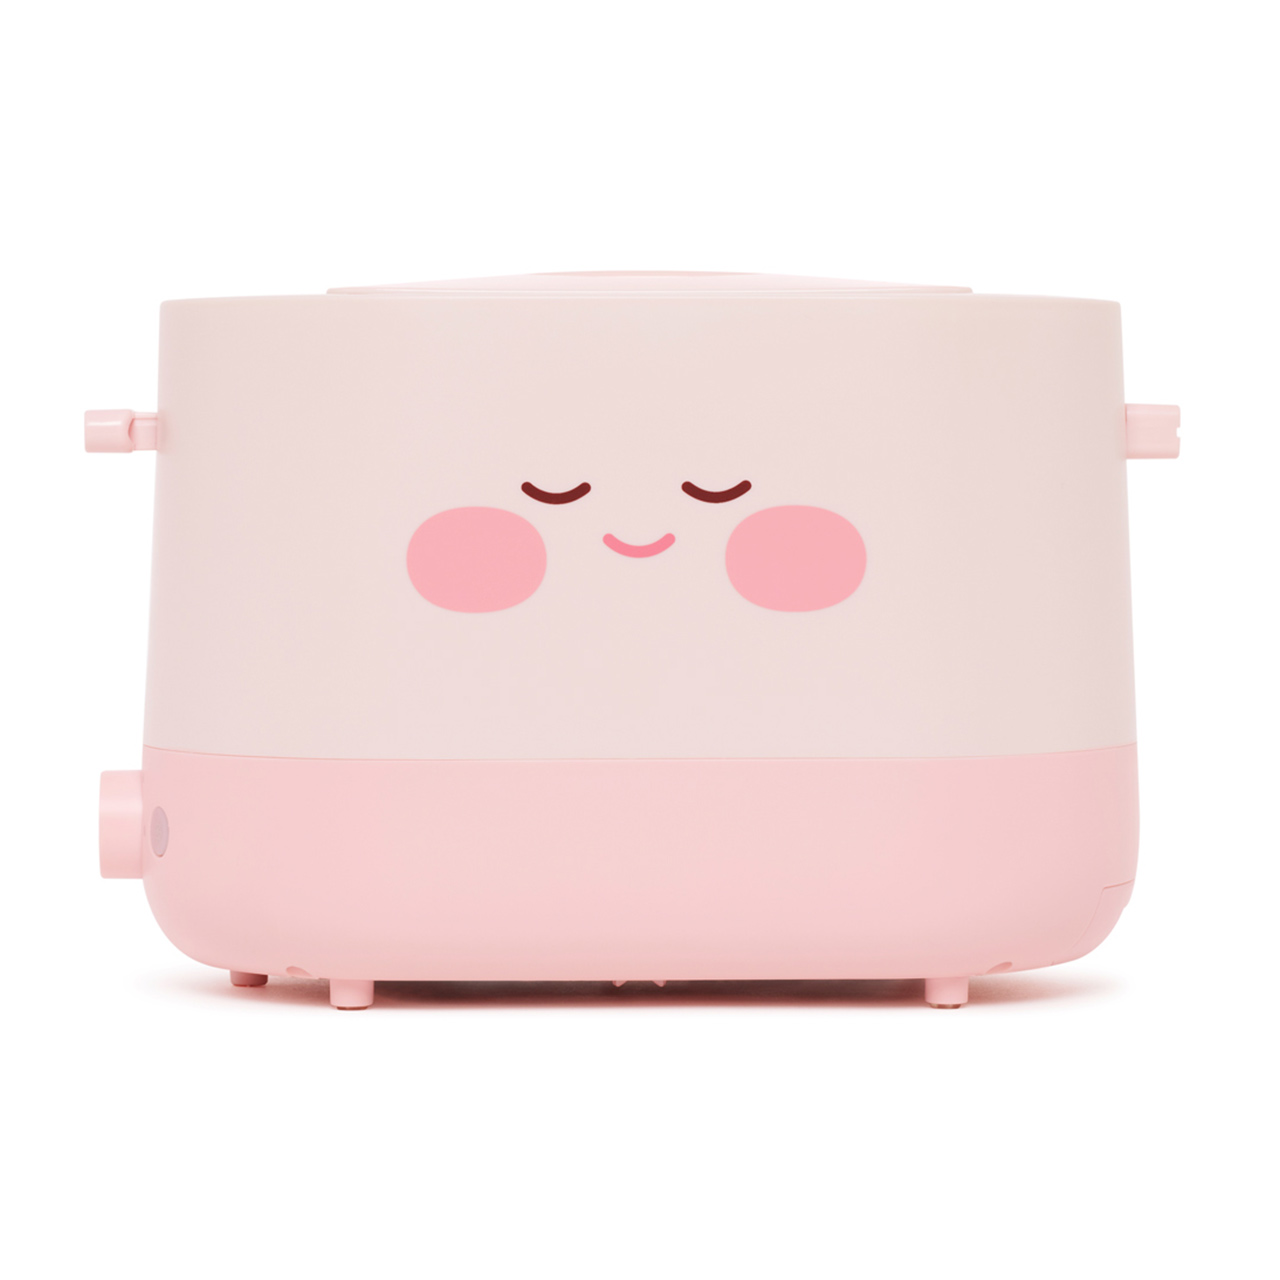 (One) Kakao friends - Pitch pitch toaster | محمصه  على شكل شخصيات كاكاو فريندز